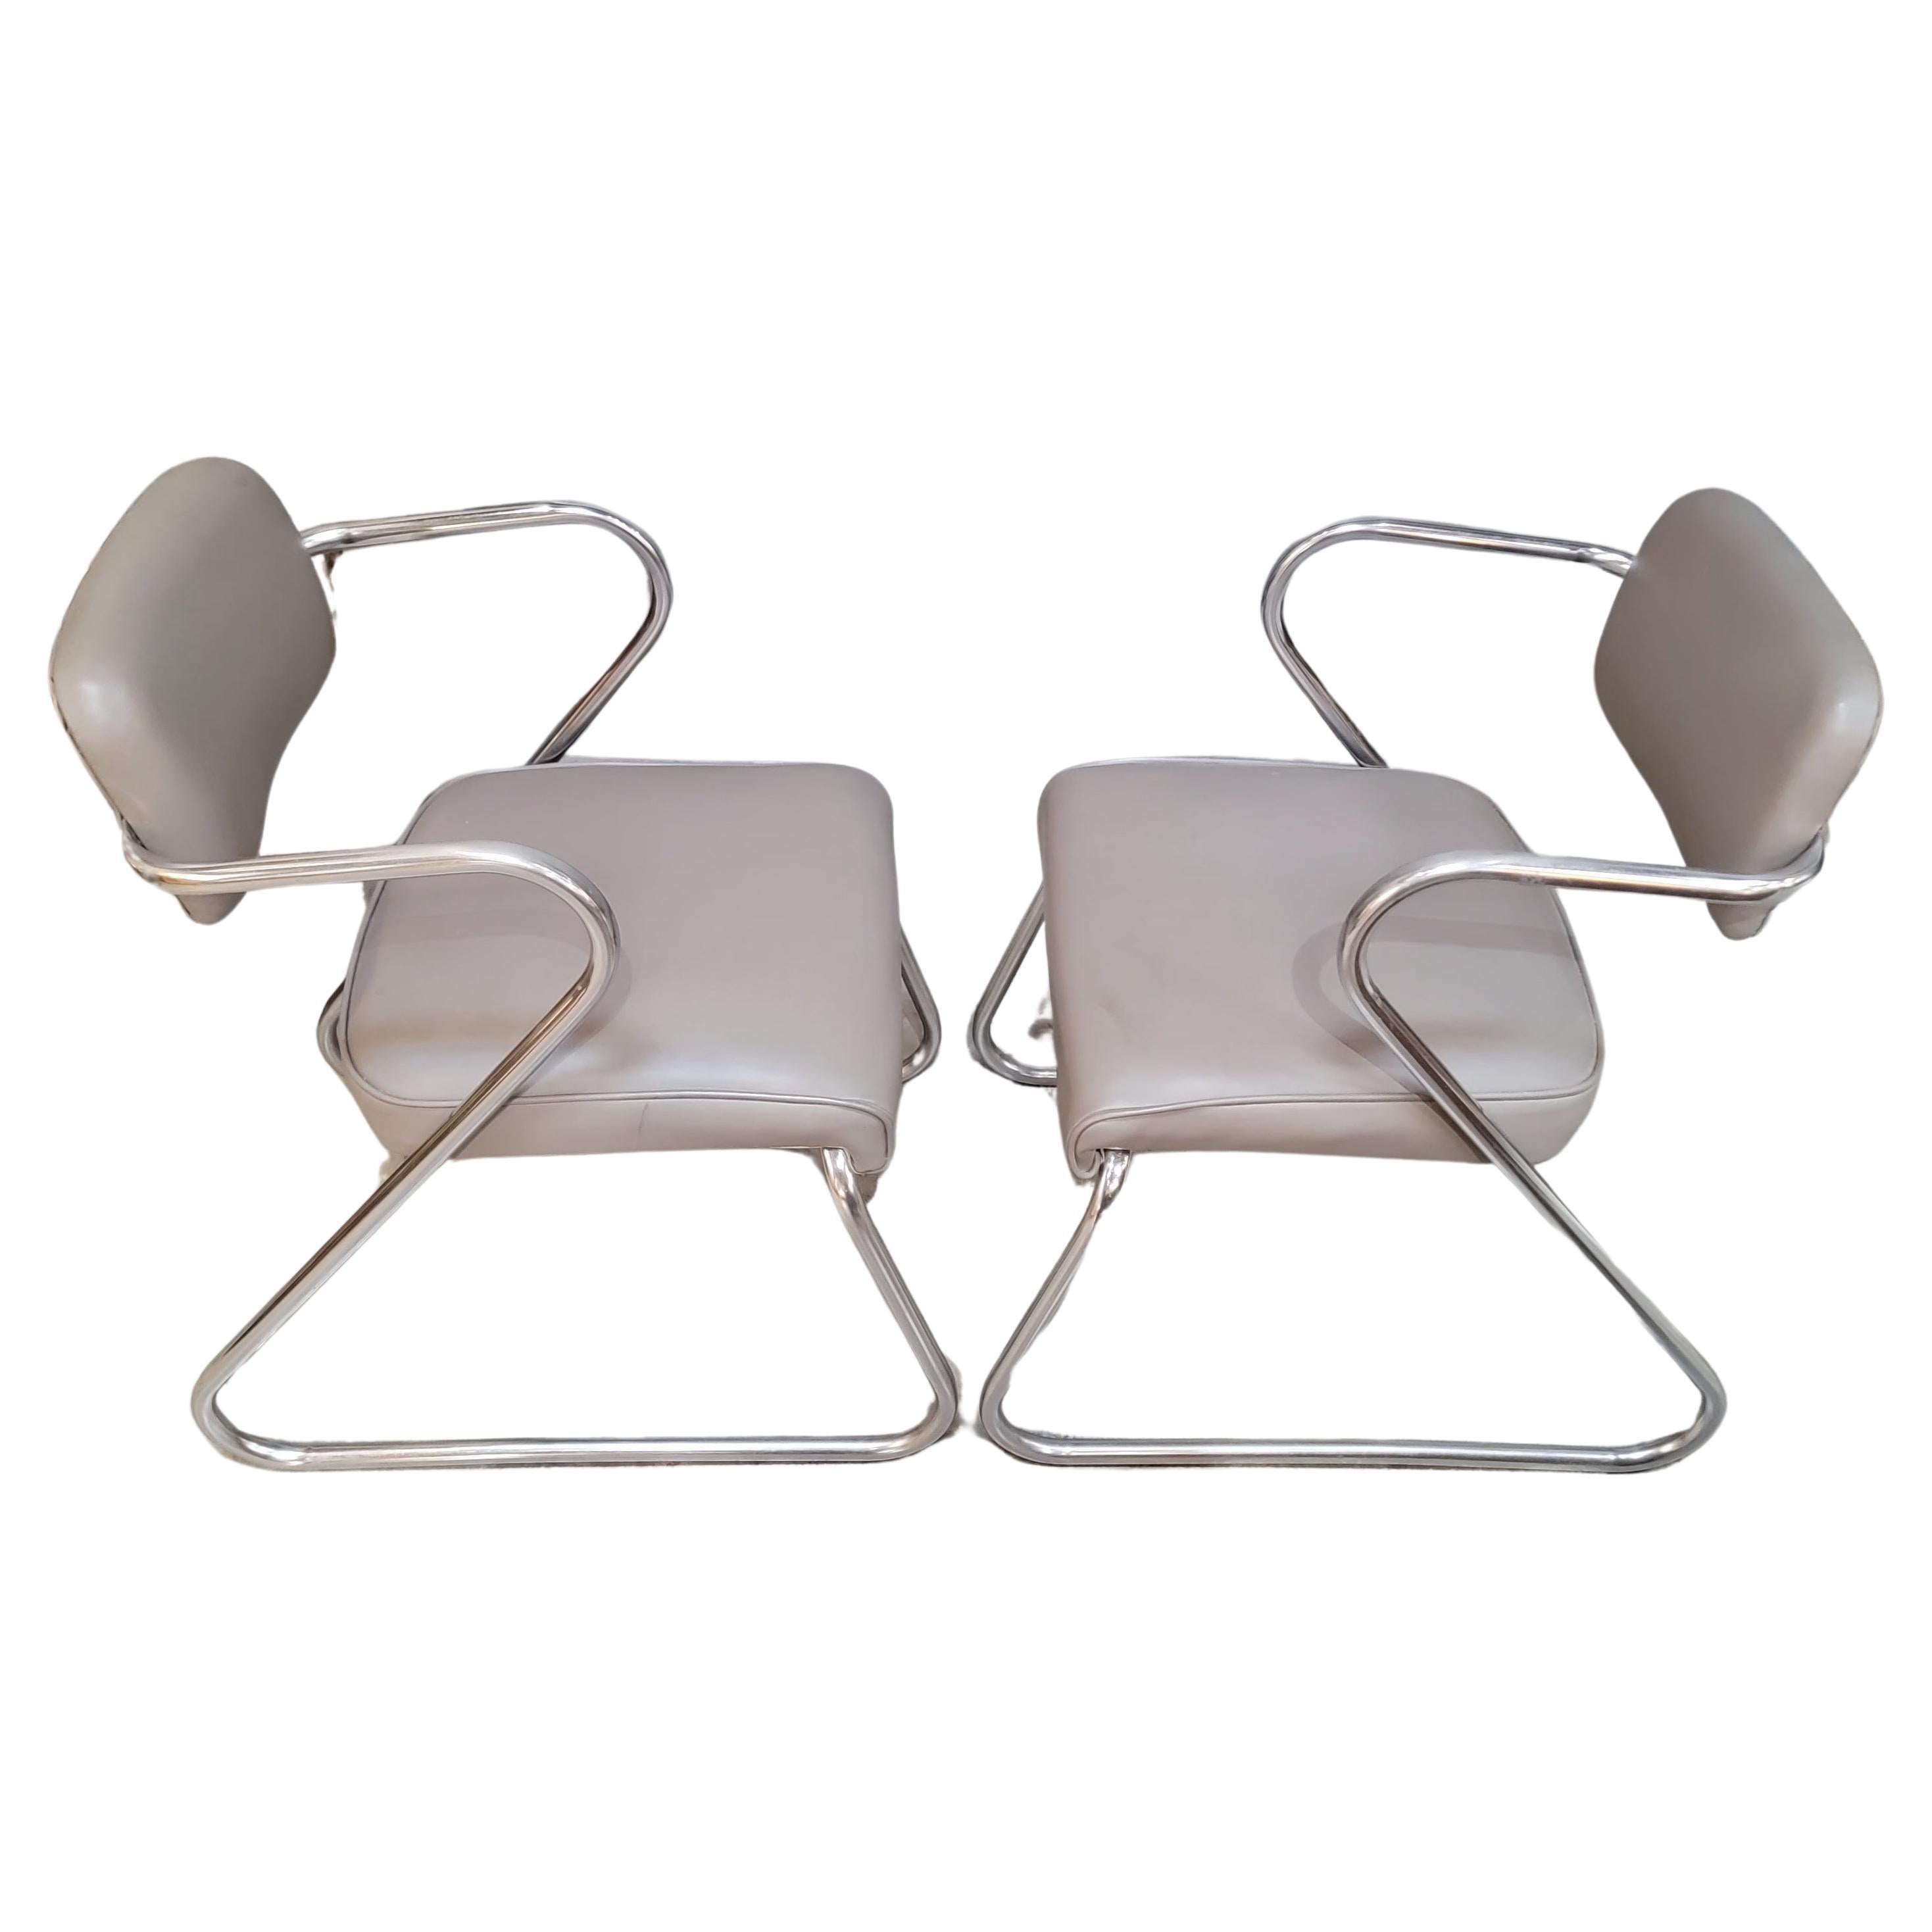 1950's Chrome Chairs Manner of KEM Weber A Pair